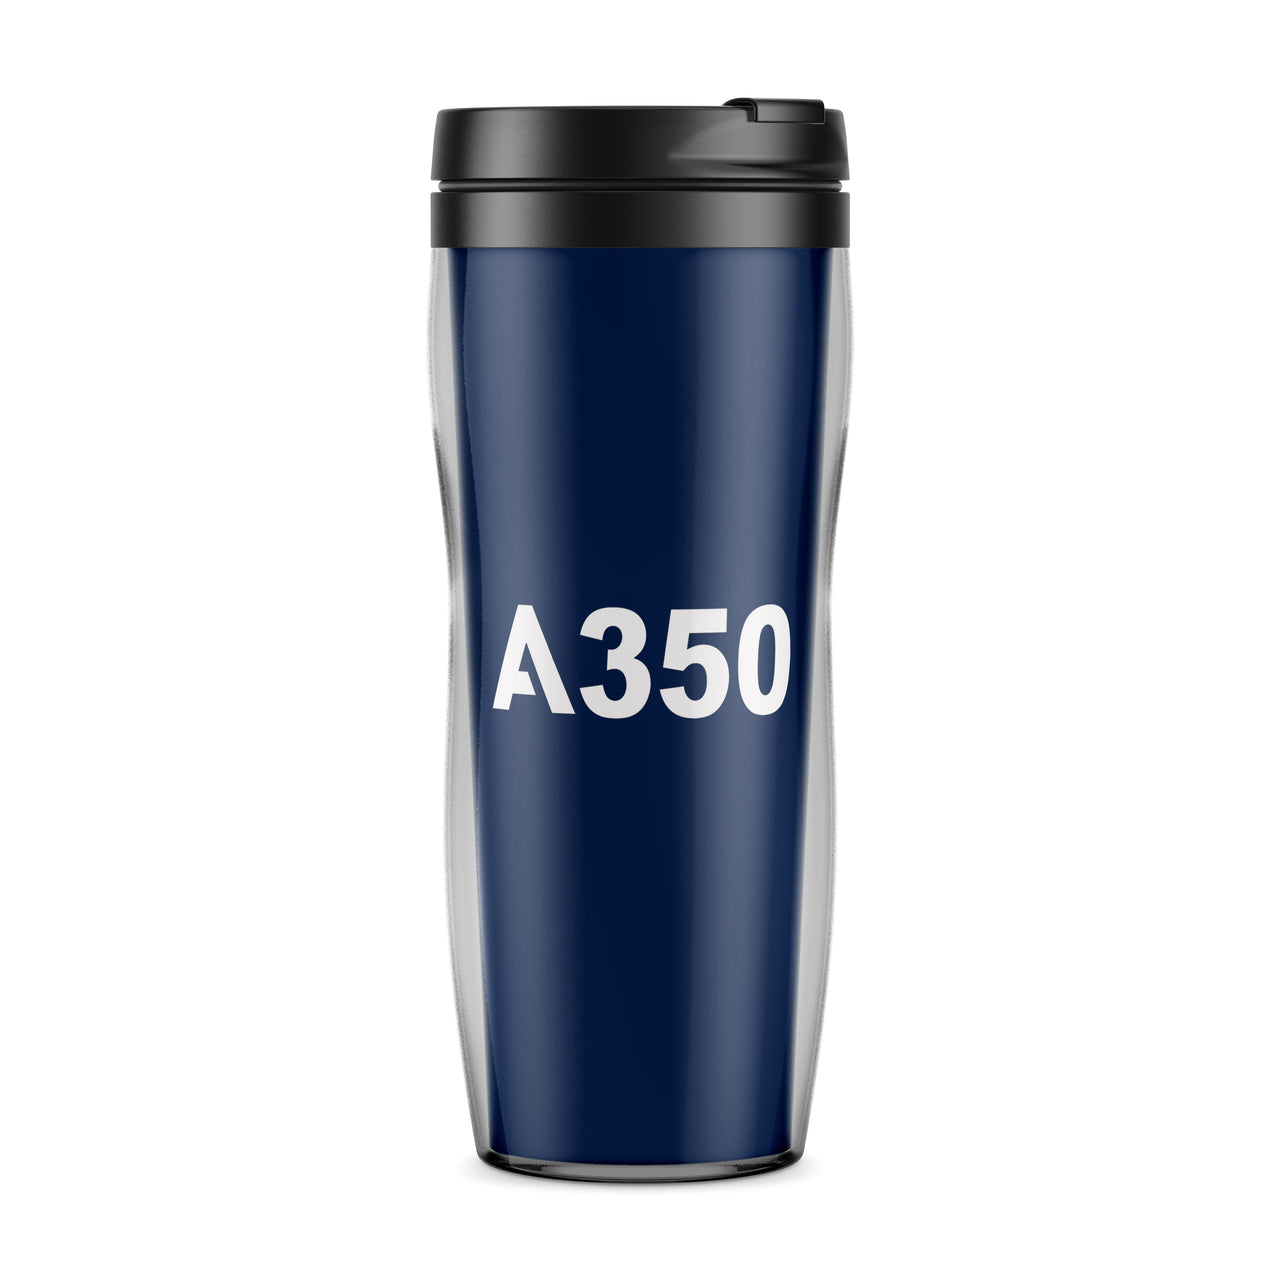 A350 Flat Text Designed Travel Mugs